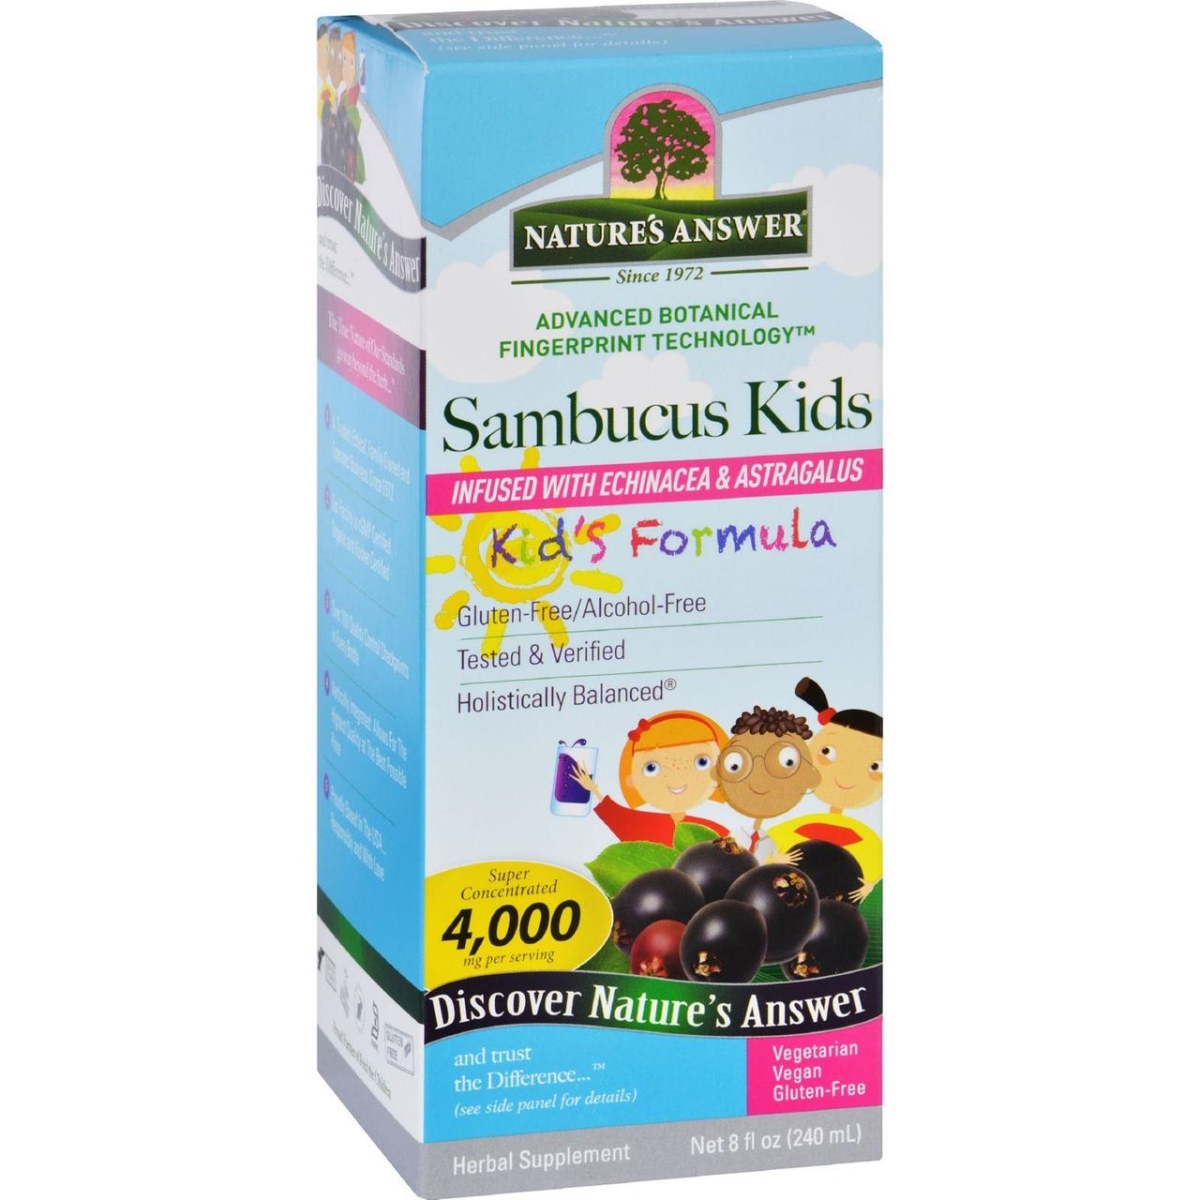 Natures Answer Hg1718758 8 Oz Sambucus Kids Formula - Original Flavor